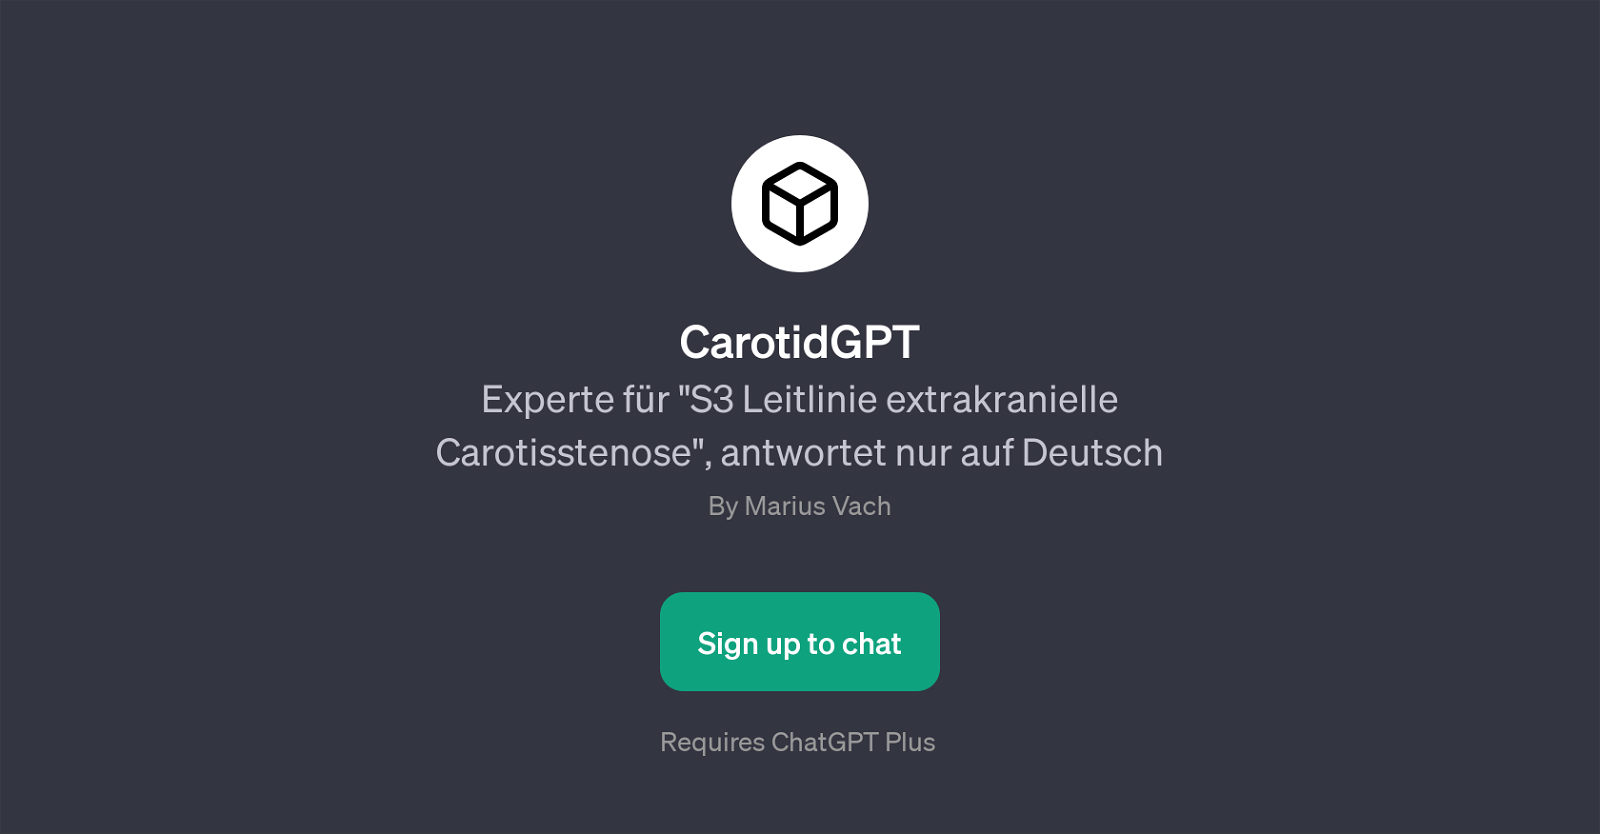 CarotidGPT website